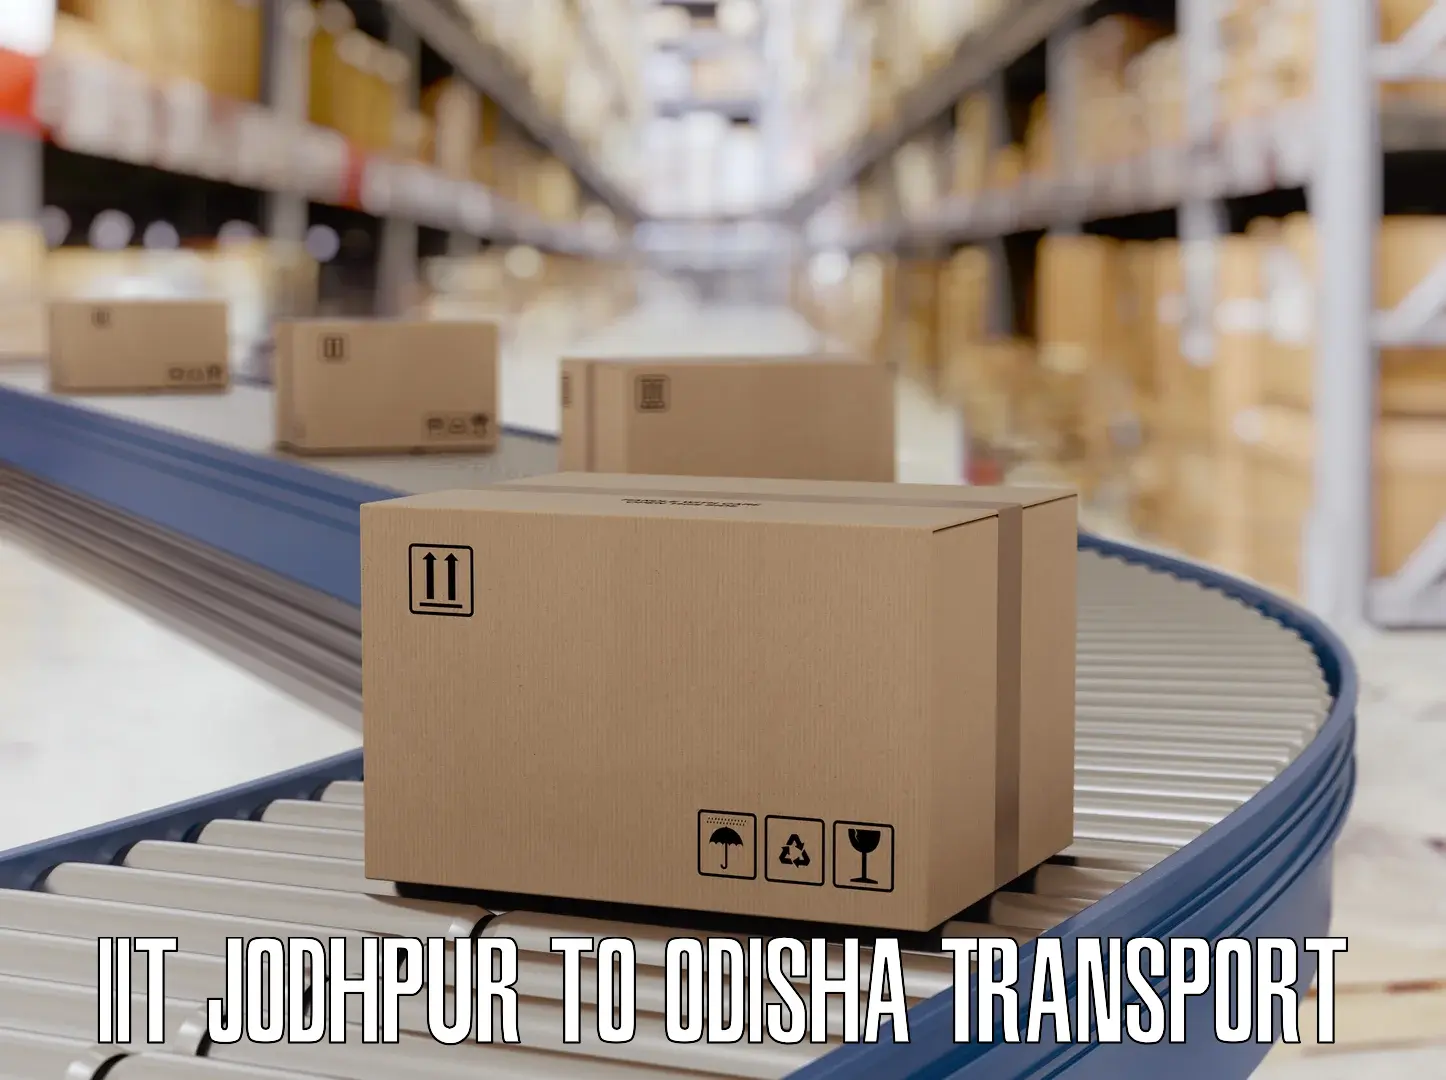 Transport shared services in IIT Jodhpur to Odisha